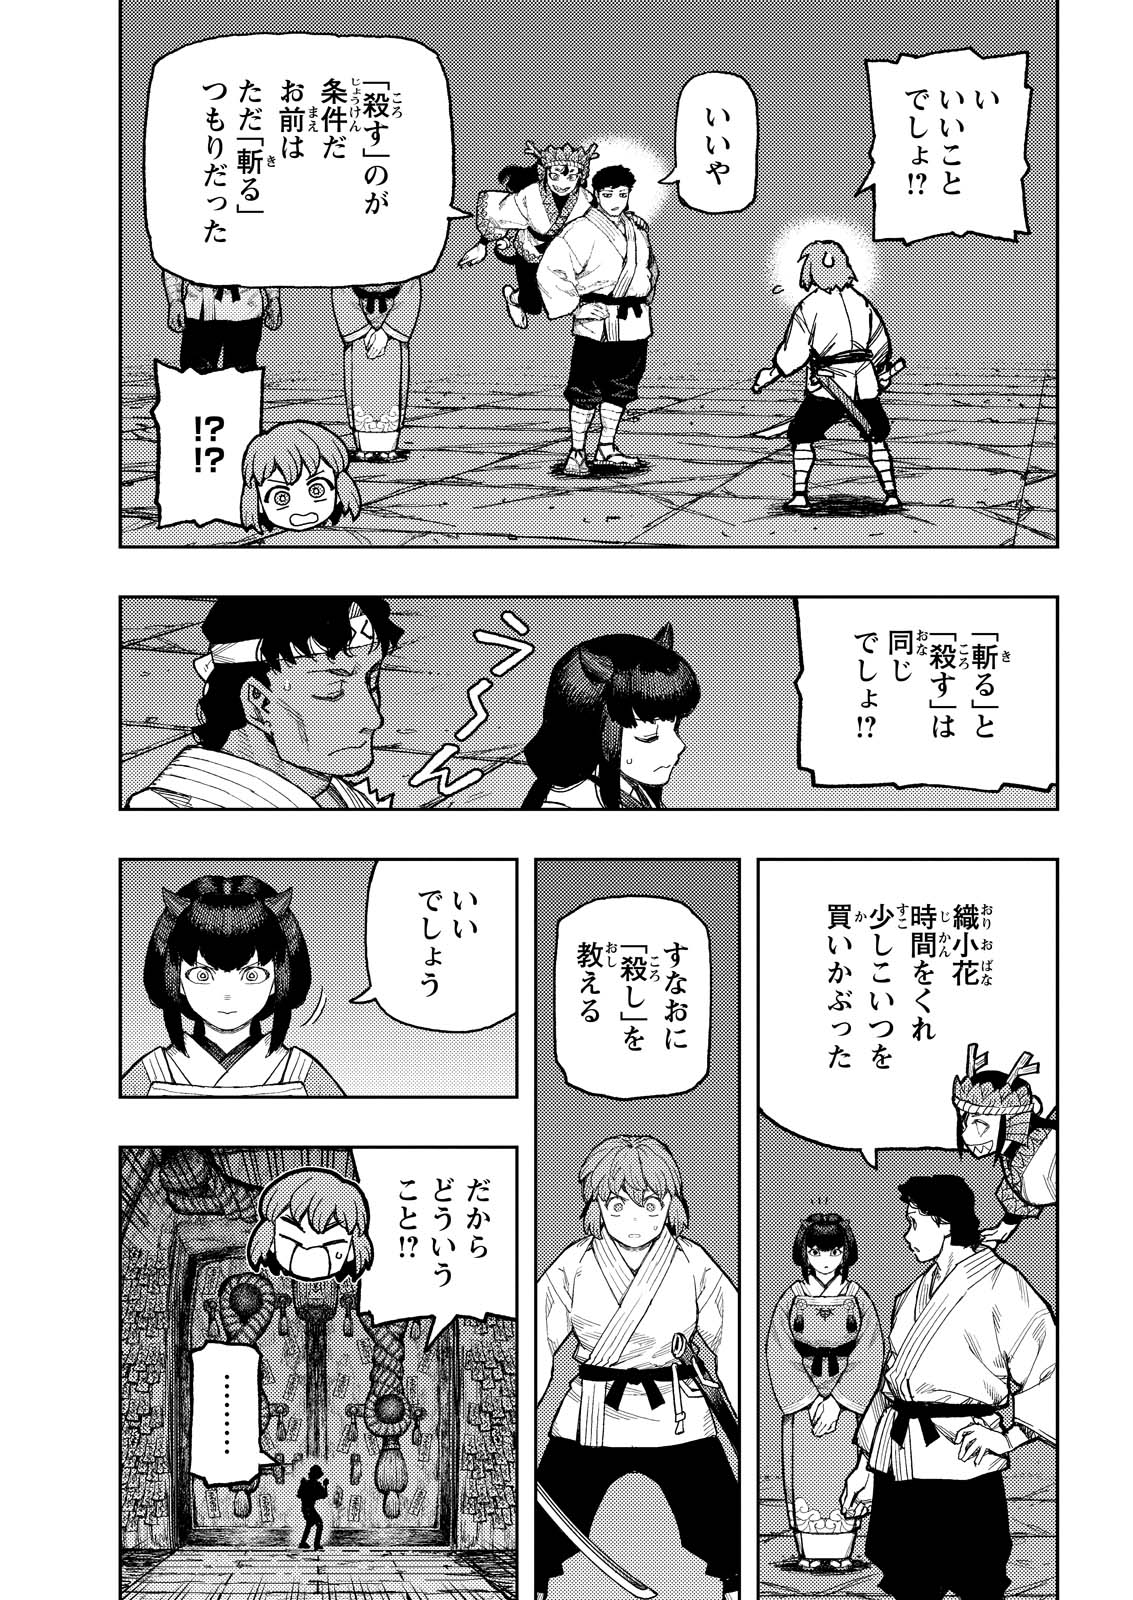 Tsugumomo - Chapter 167 - Page 7